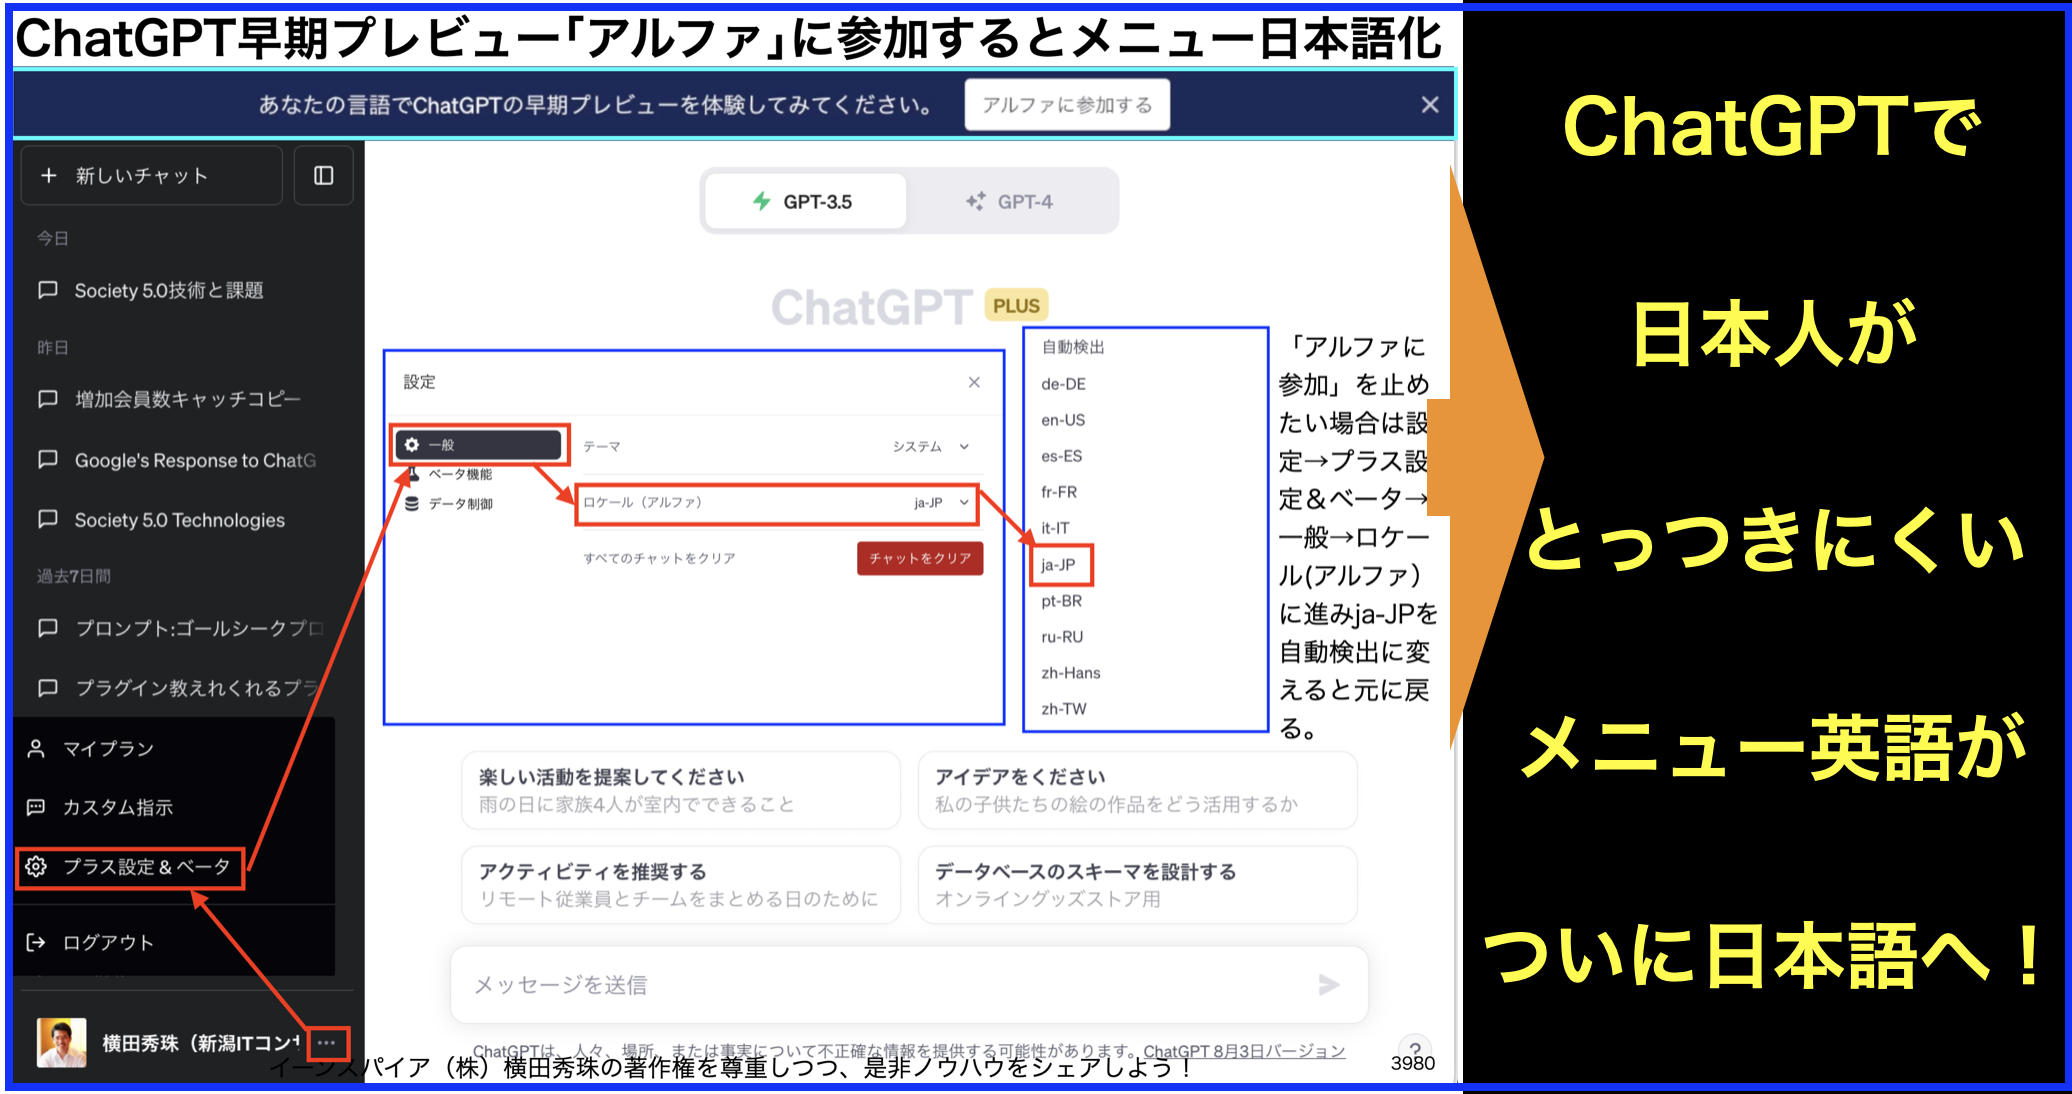 ChatGPT早期プレビュー｢アルファ｣参加でメニューが日本語化